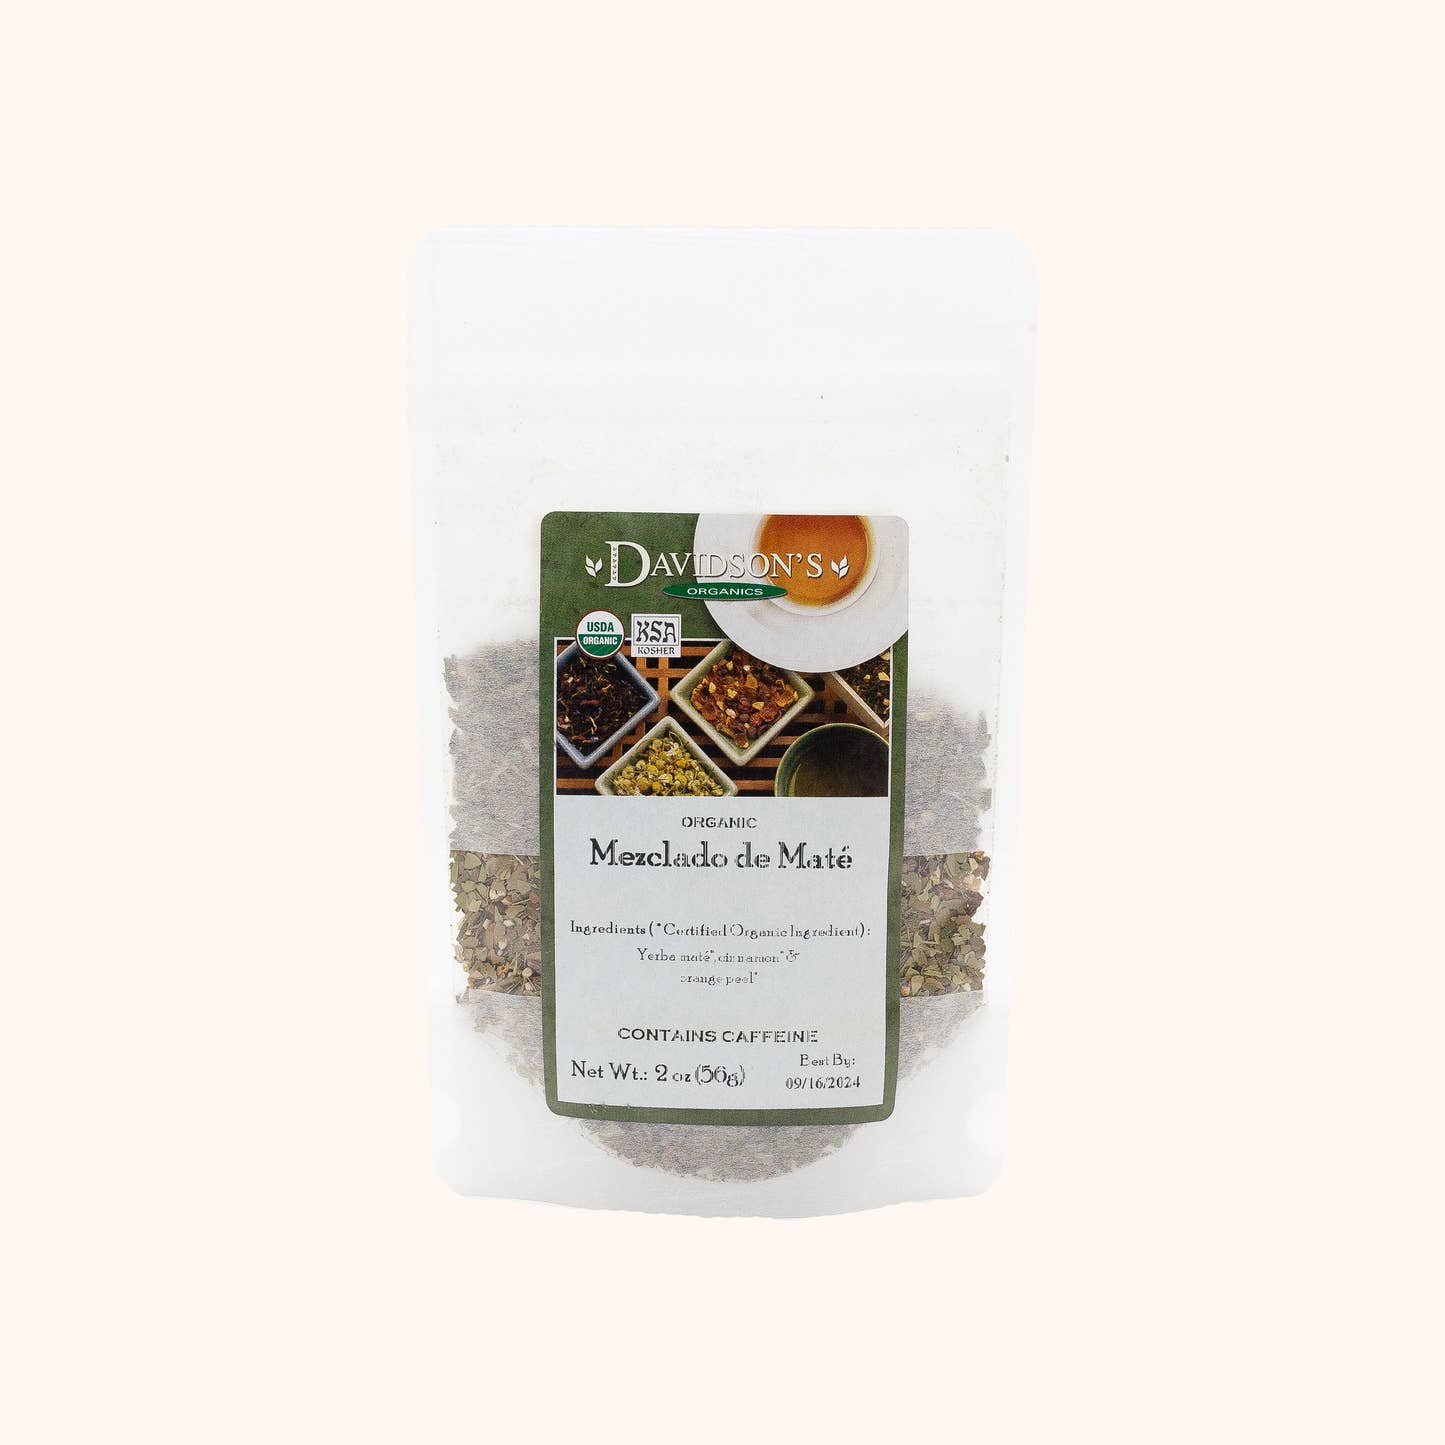 Mezclado de Mate by Davidson's Organic Teas loose leaf yerba mate tea pouch